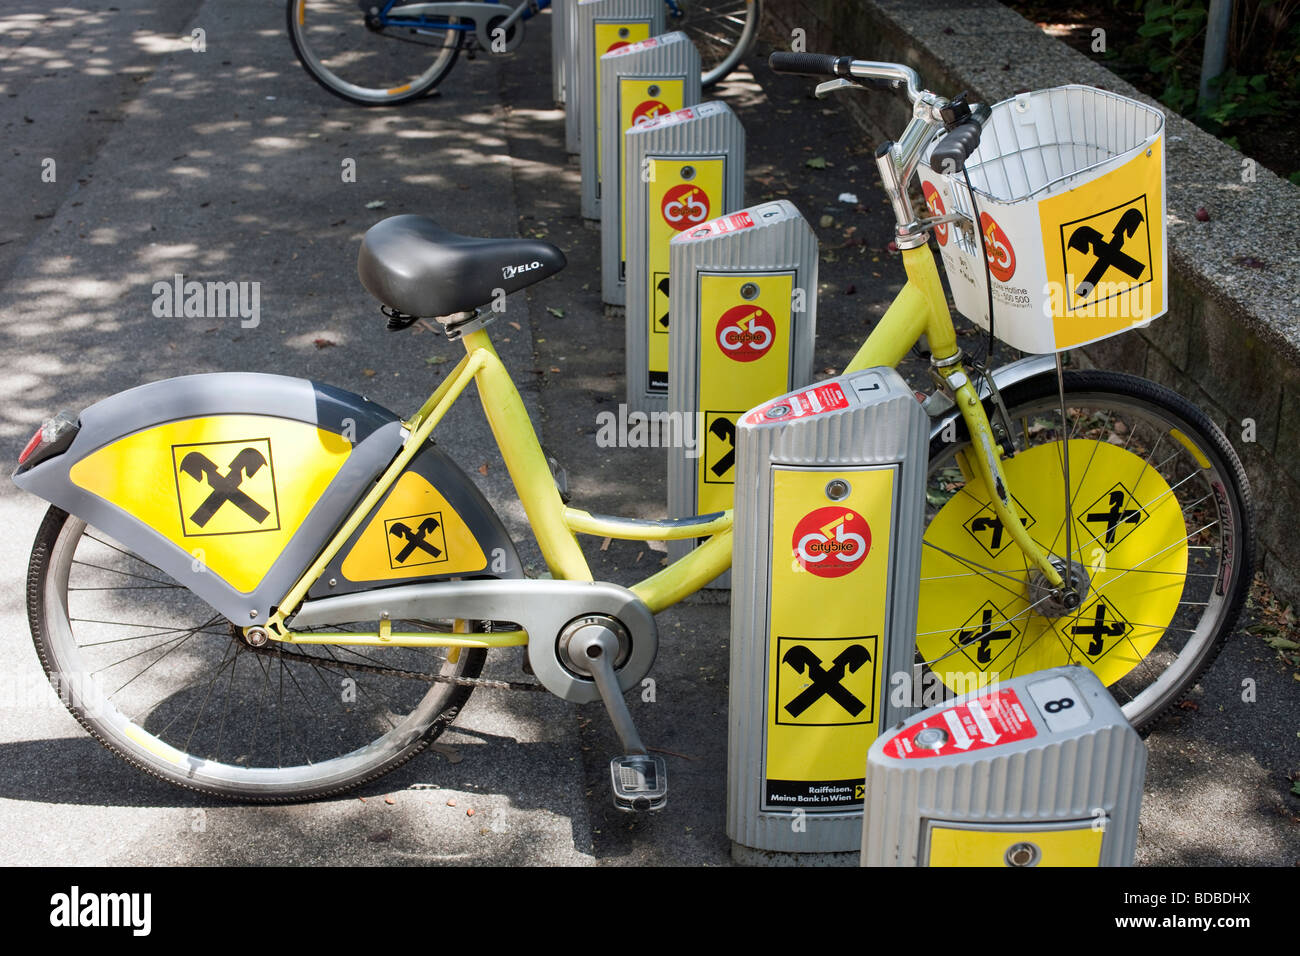 Citybike rental bicycle stand, Vienna, Austria Stock Photo